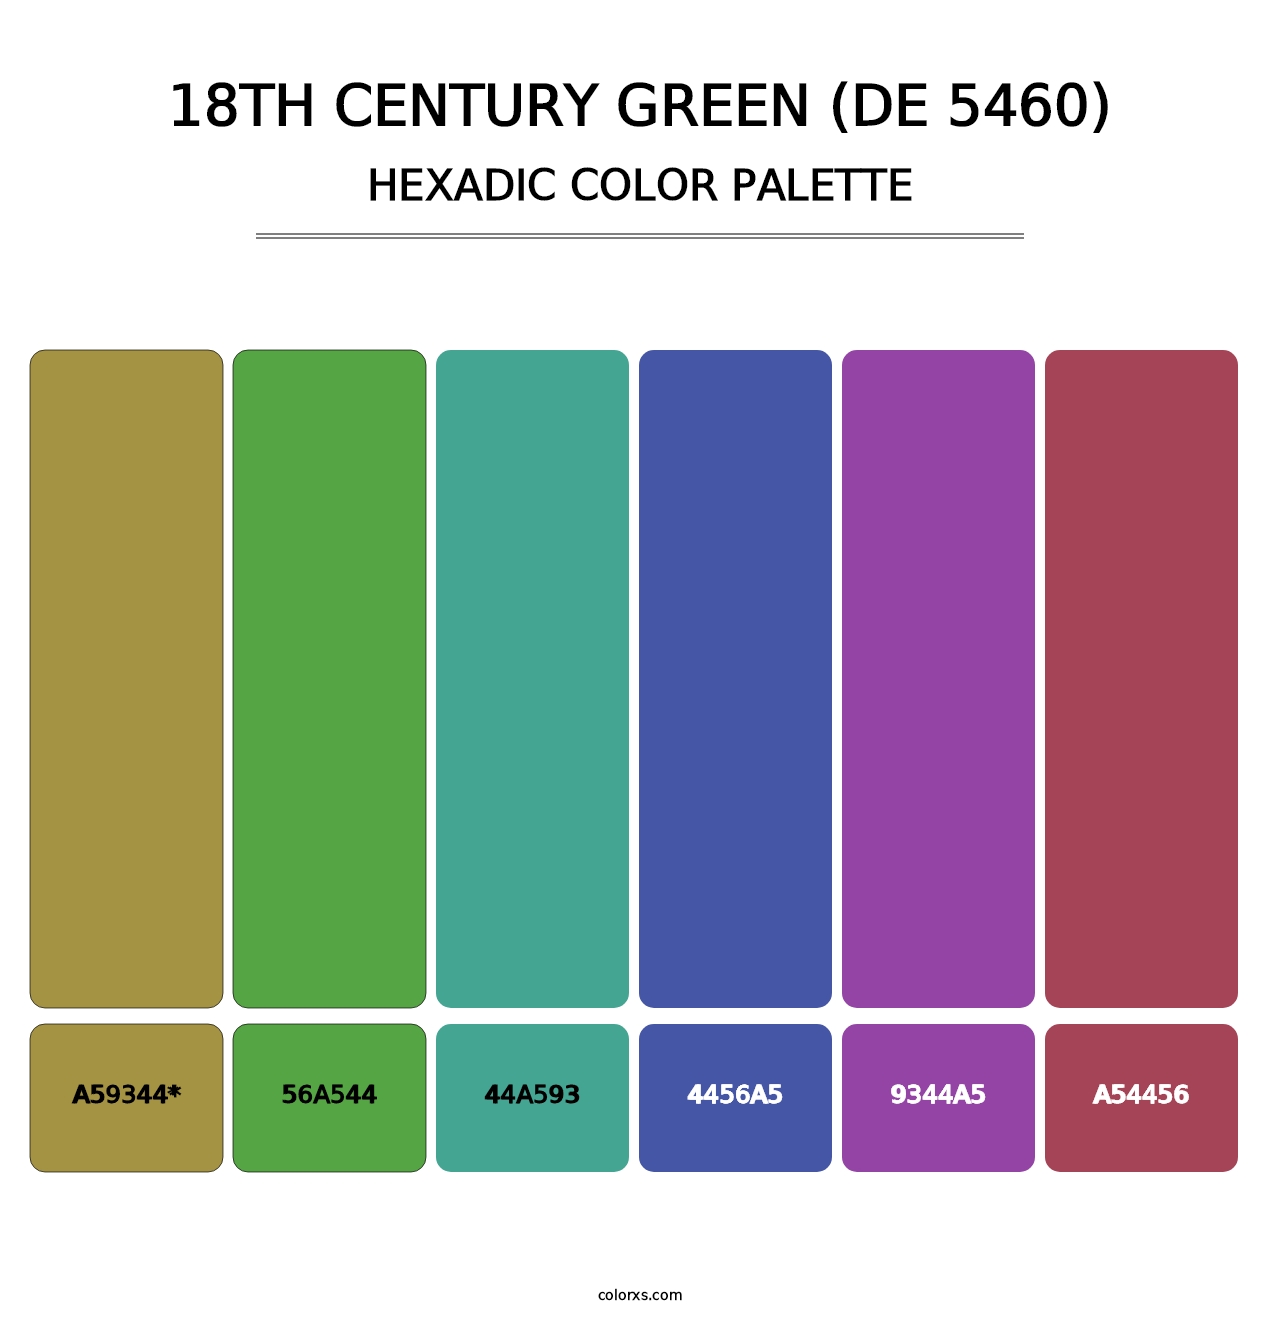 18th Century Green (DE 5460) - Hexadic Color Palette